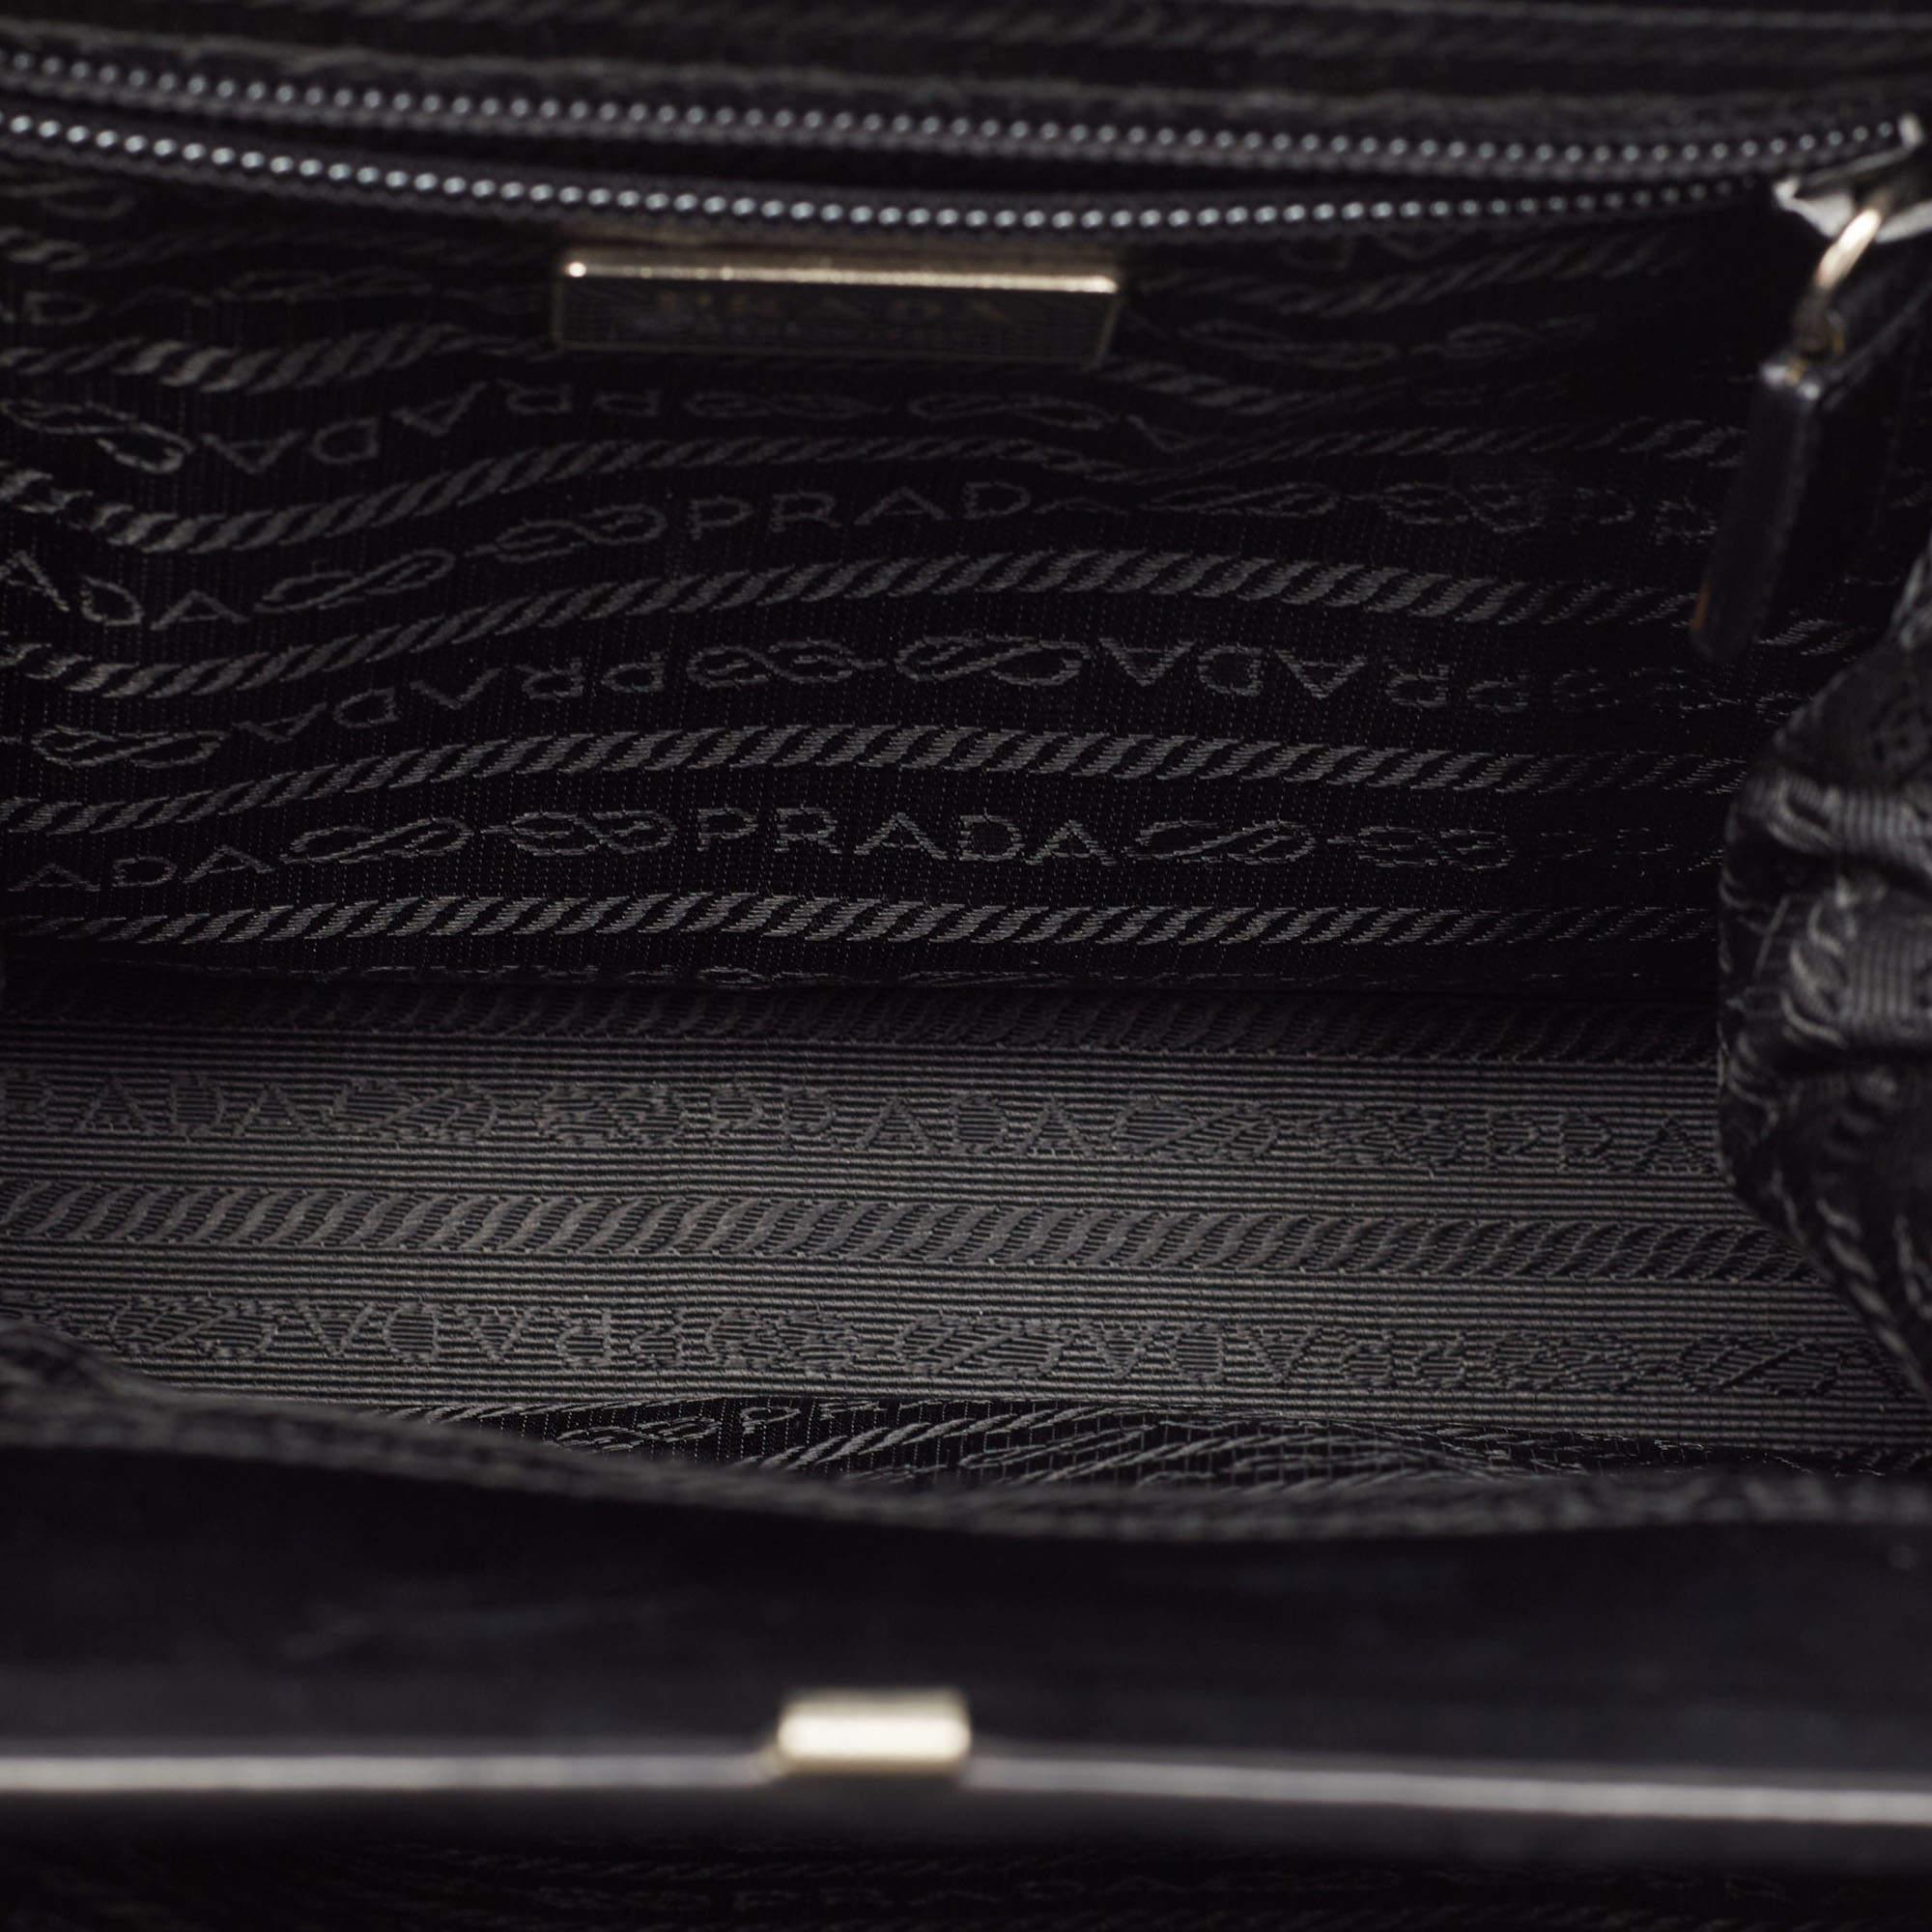 Prada Black/White Patent Leather Frame Top Handle Bag 4